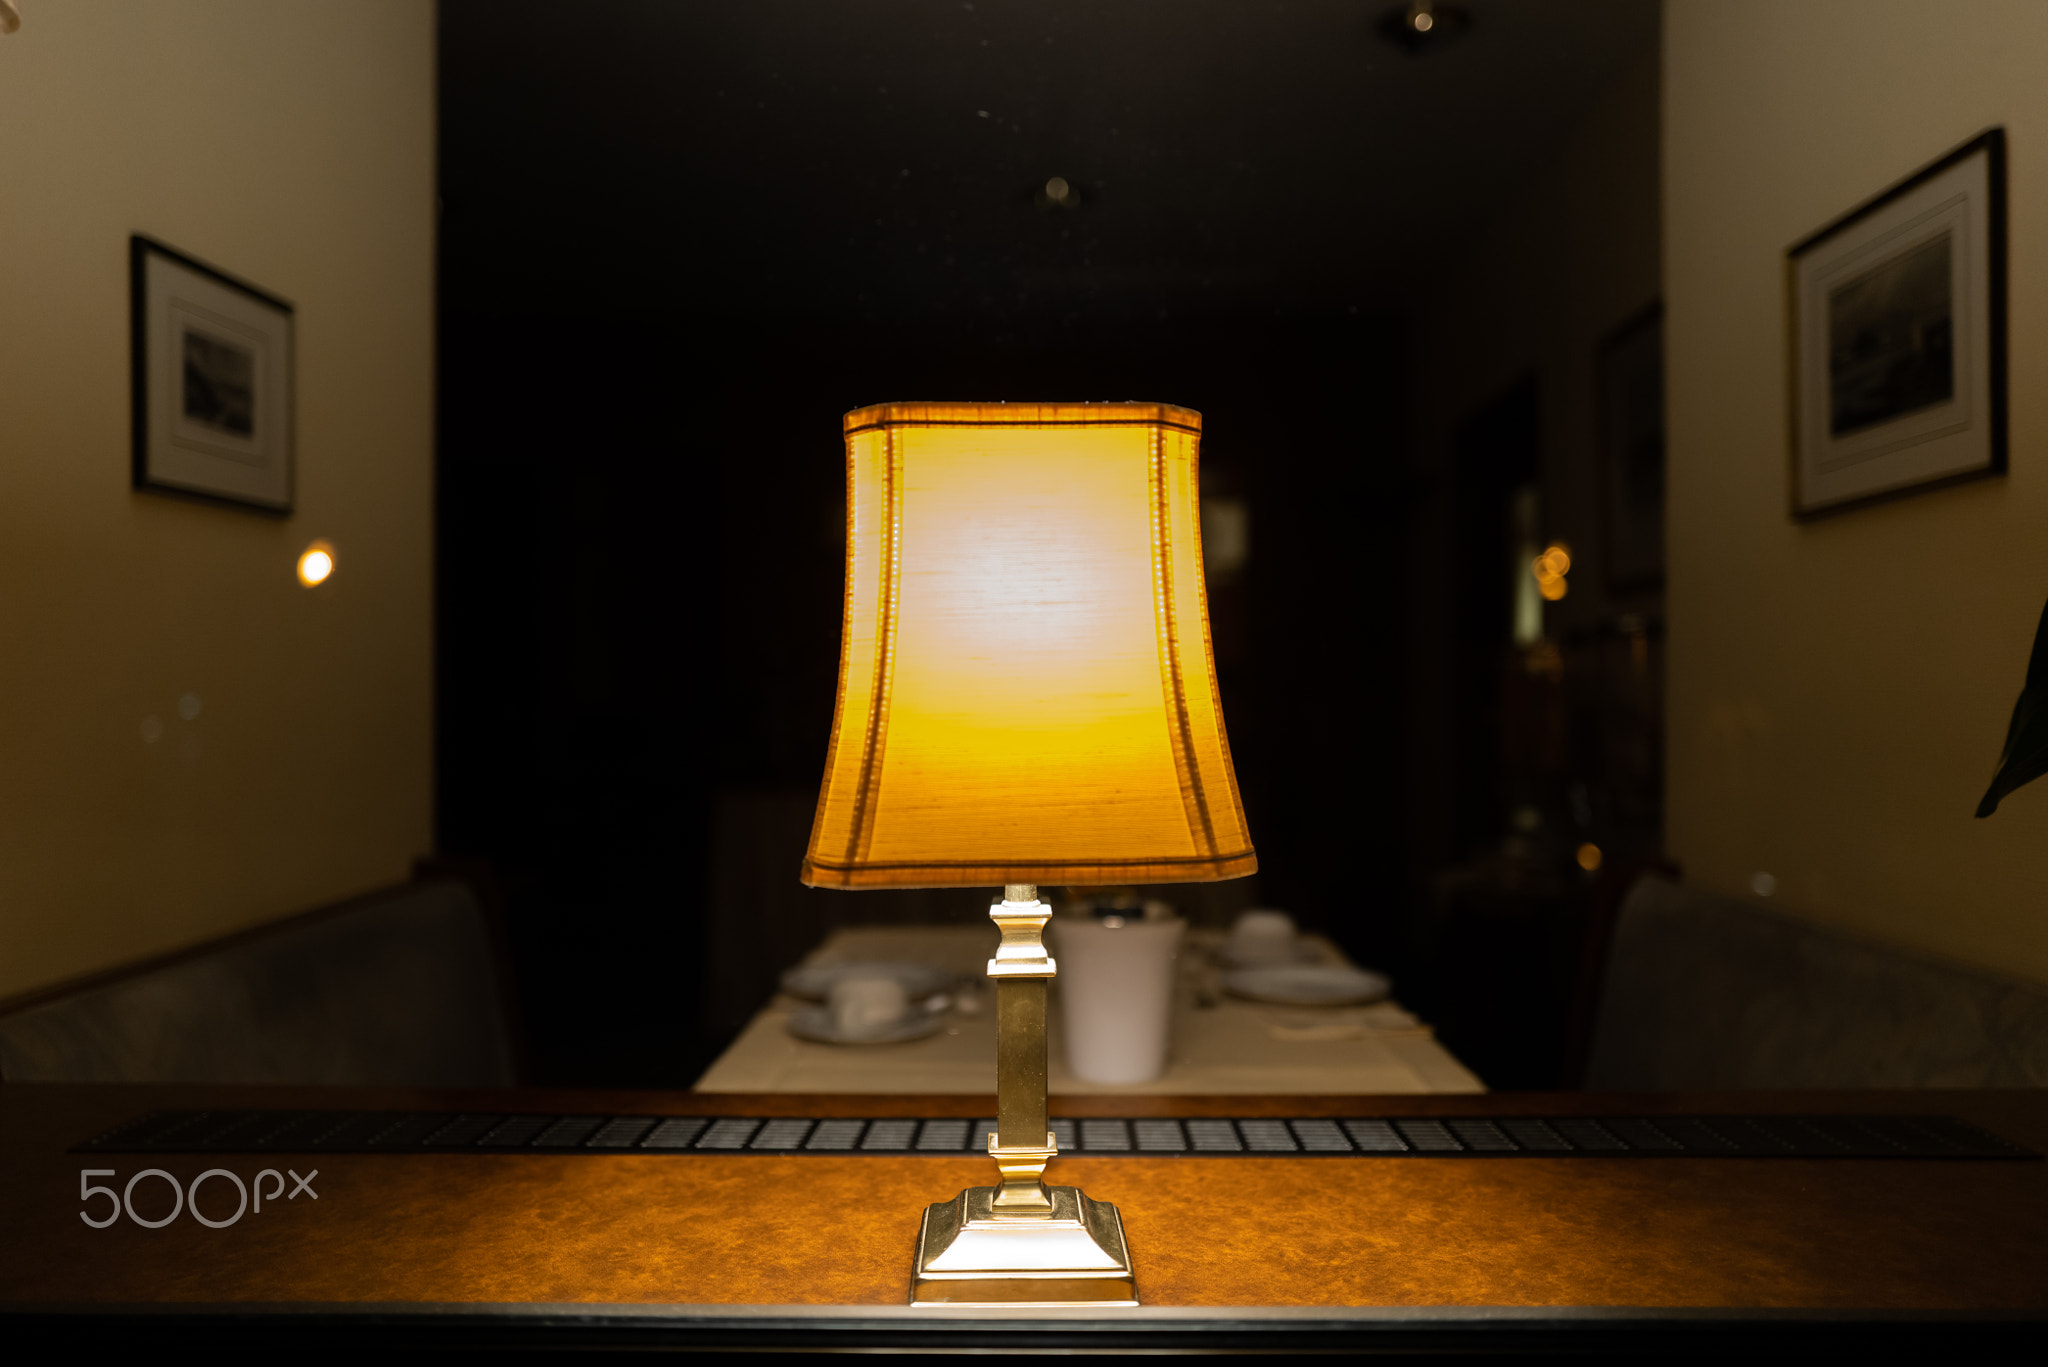 An old Lamp at night